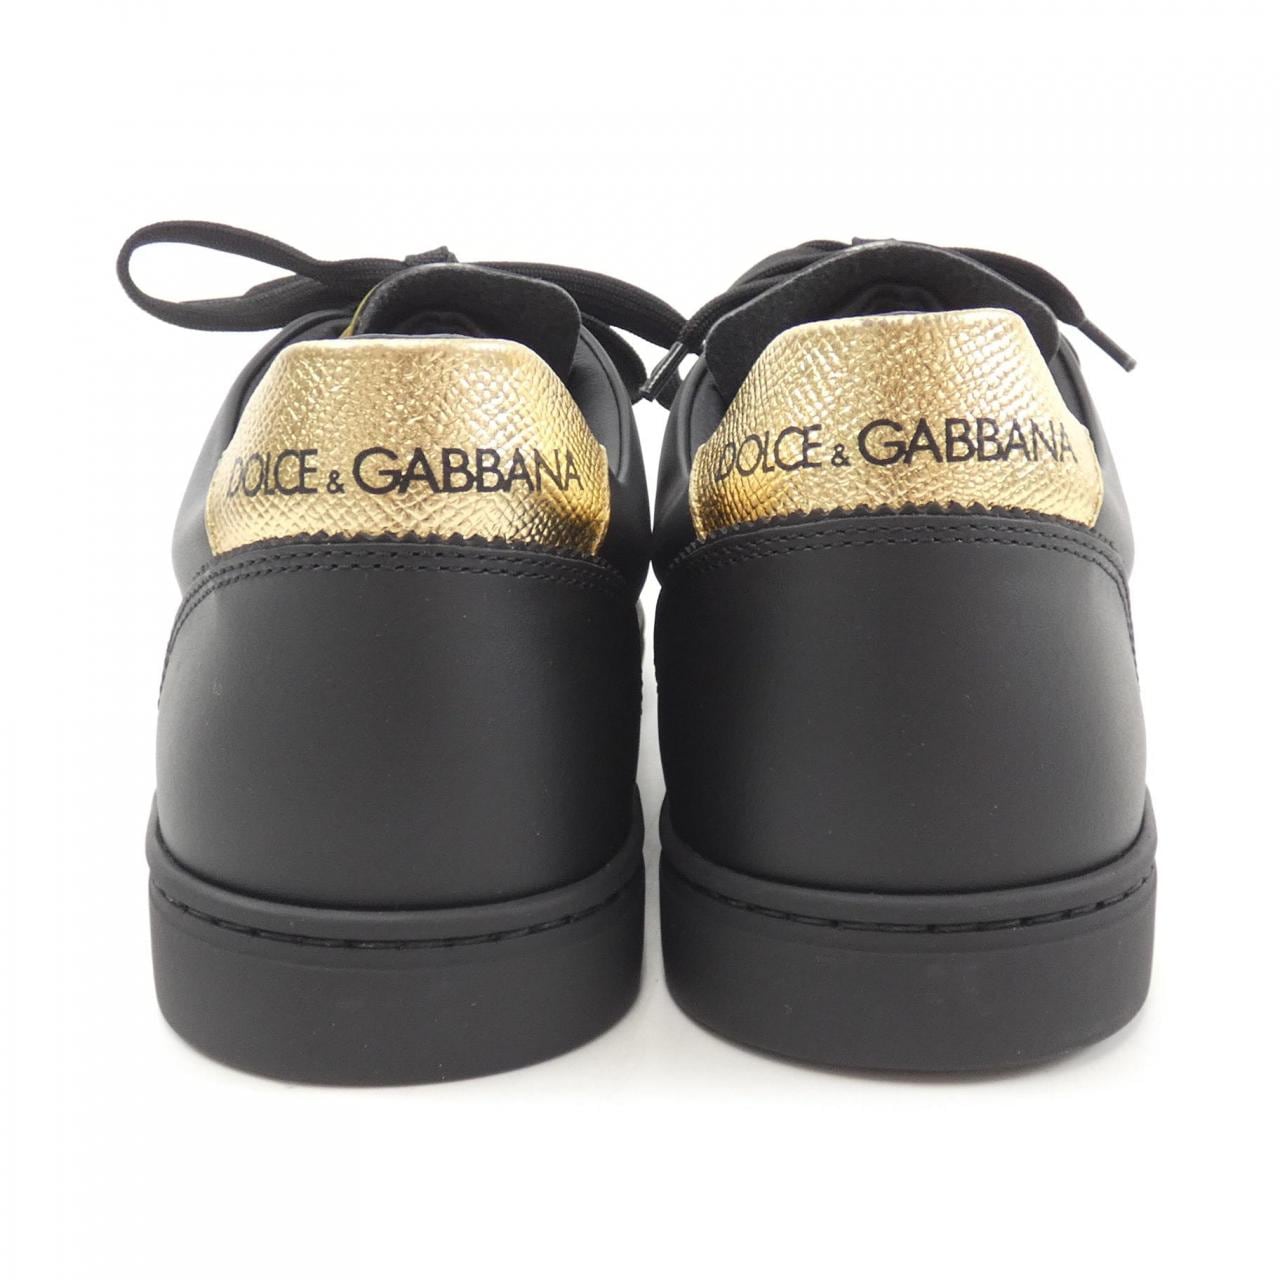 DOLCE&GABBANA杜嘉班纳运动鞋